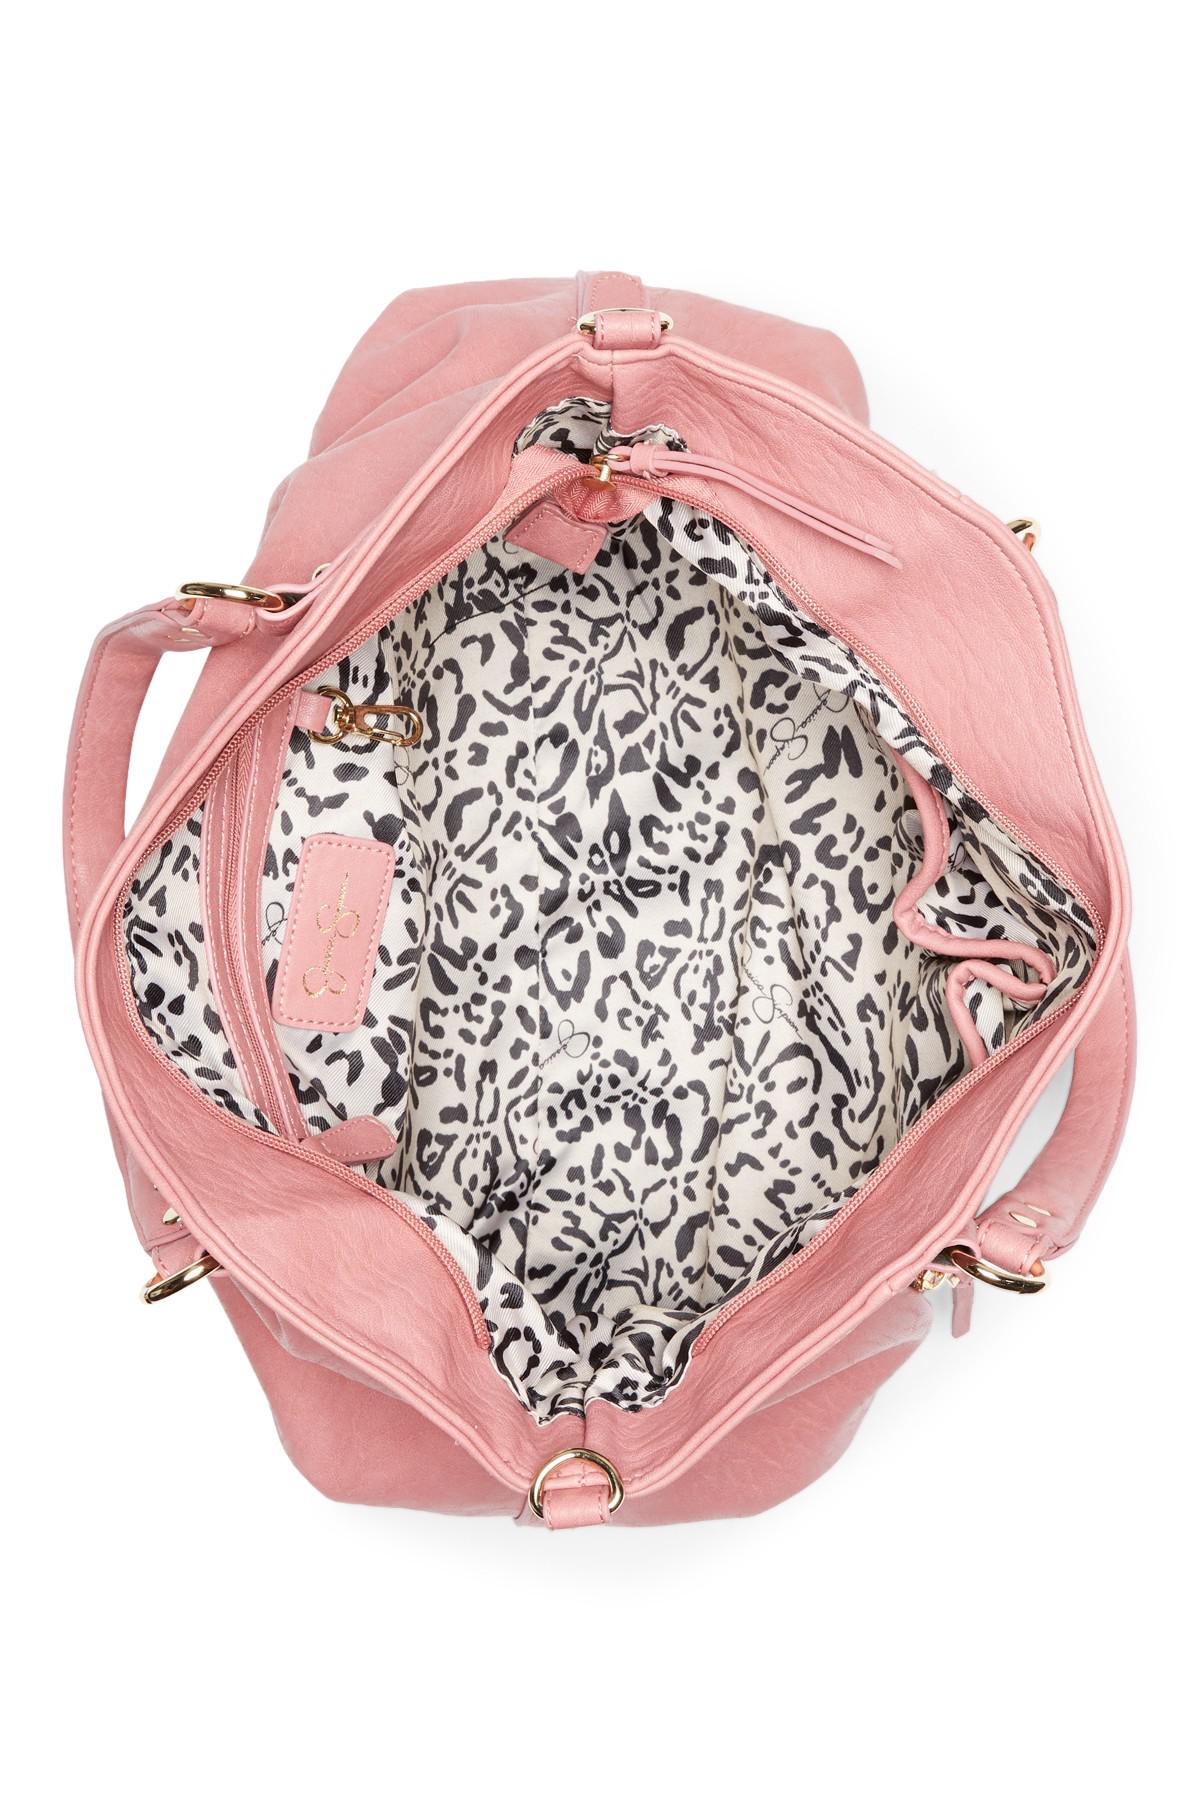 Pink Jessica Simpson purse  Jessica simpson purses, Clothes